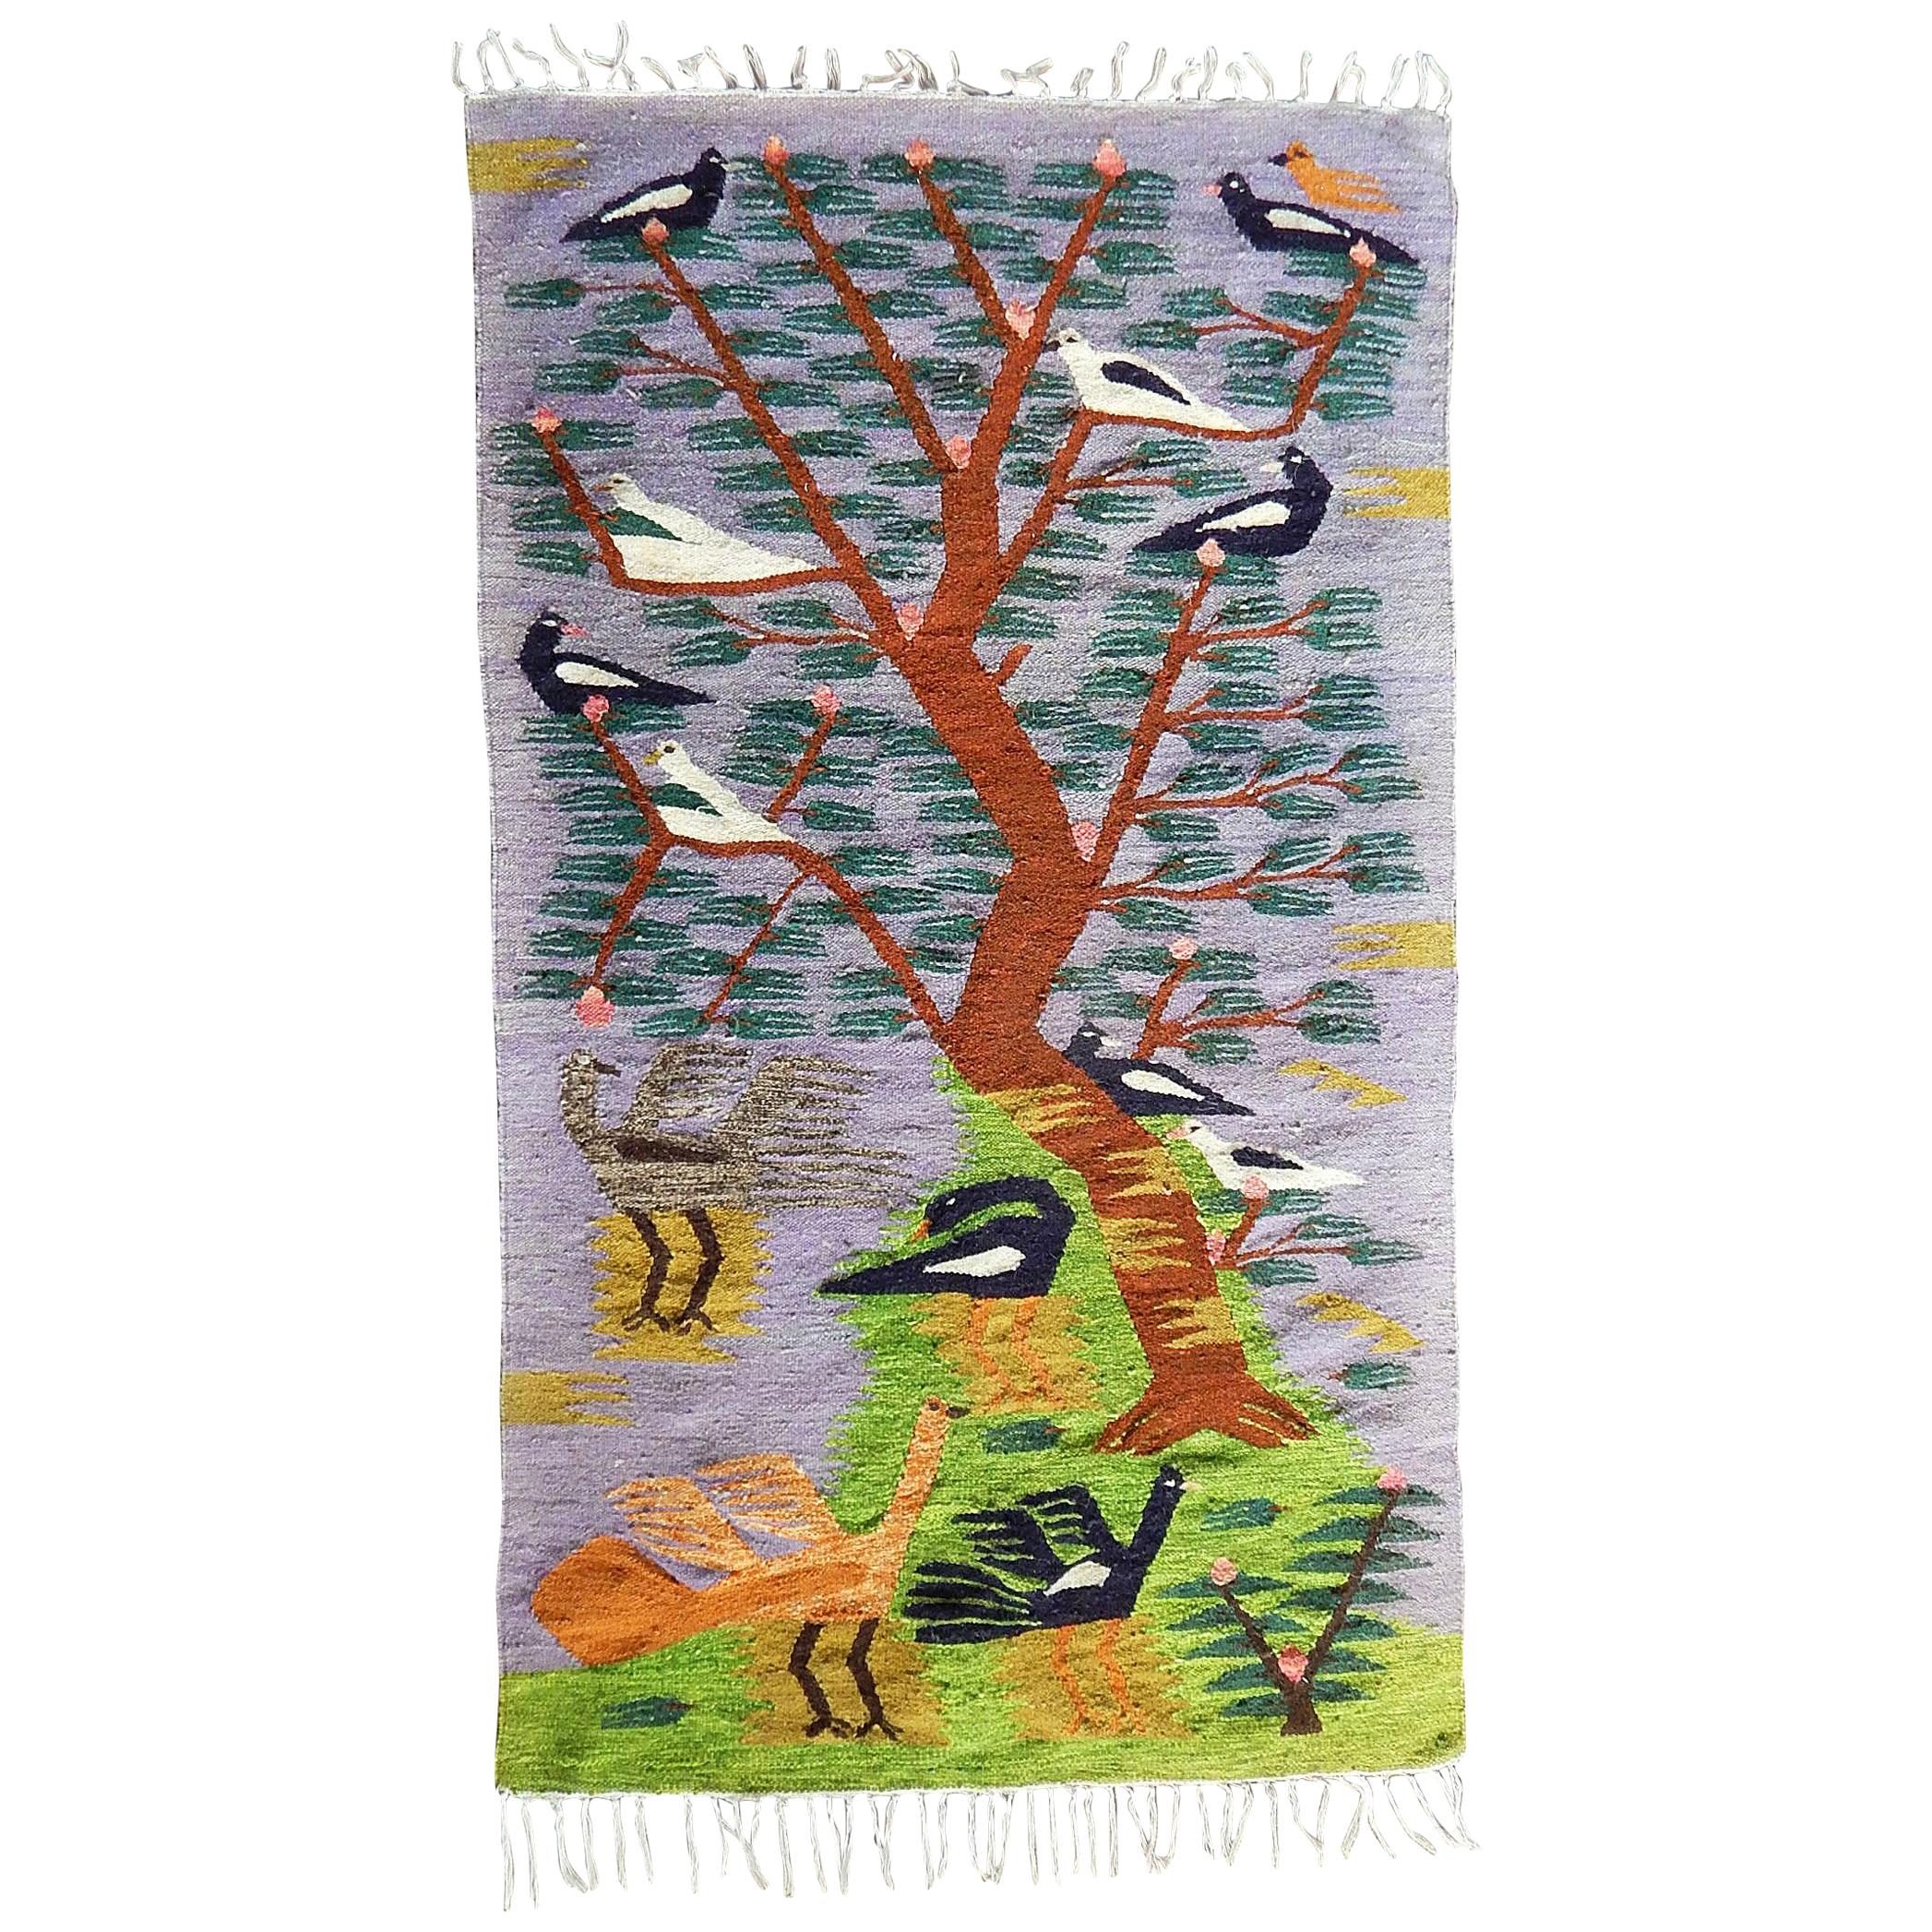 Tapisserie égyptienne « Tree of Life » (arbre de vie), influencée par l'atelier Ramsès Wissa Wassef